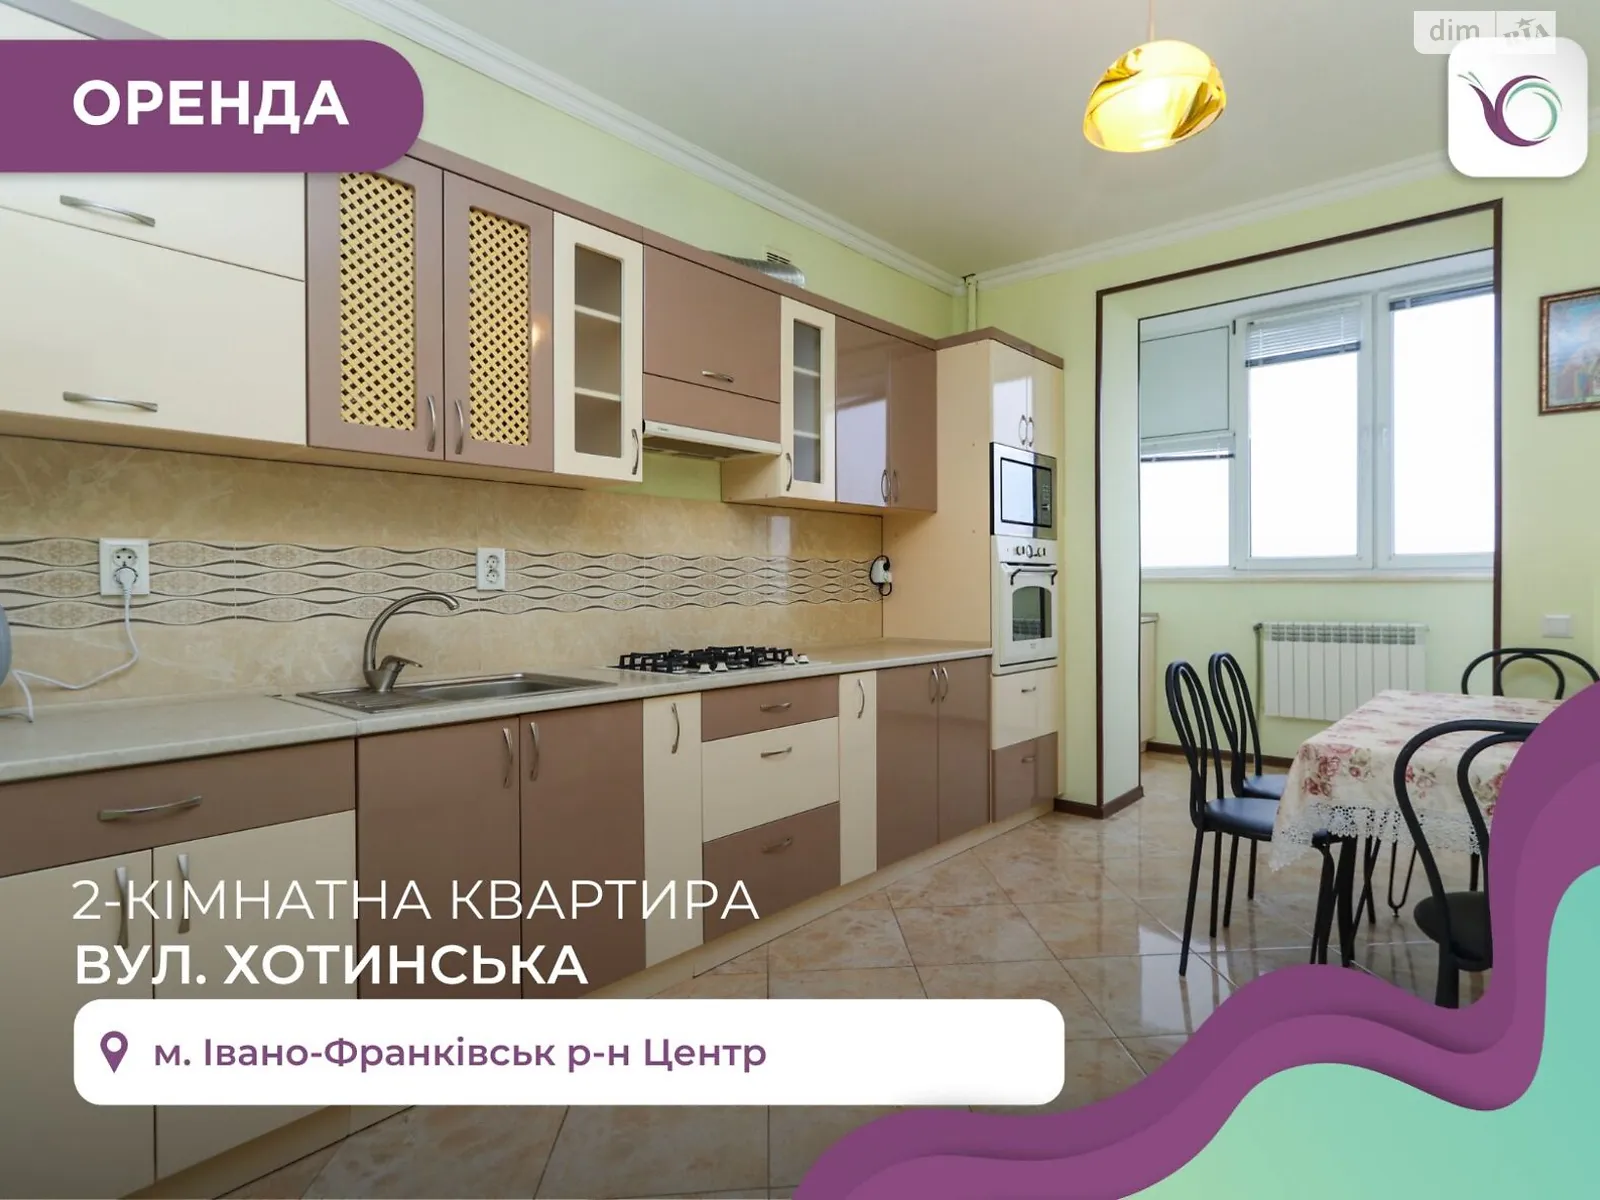 Сдается в аренду 2-комнатная квартира 60 кв. м в Ивано-Франковске, ул. Хотинская